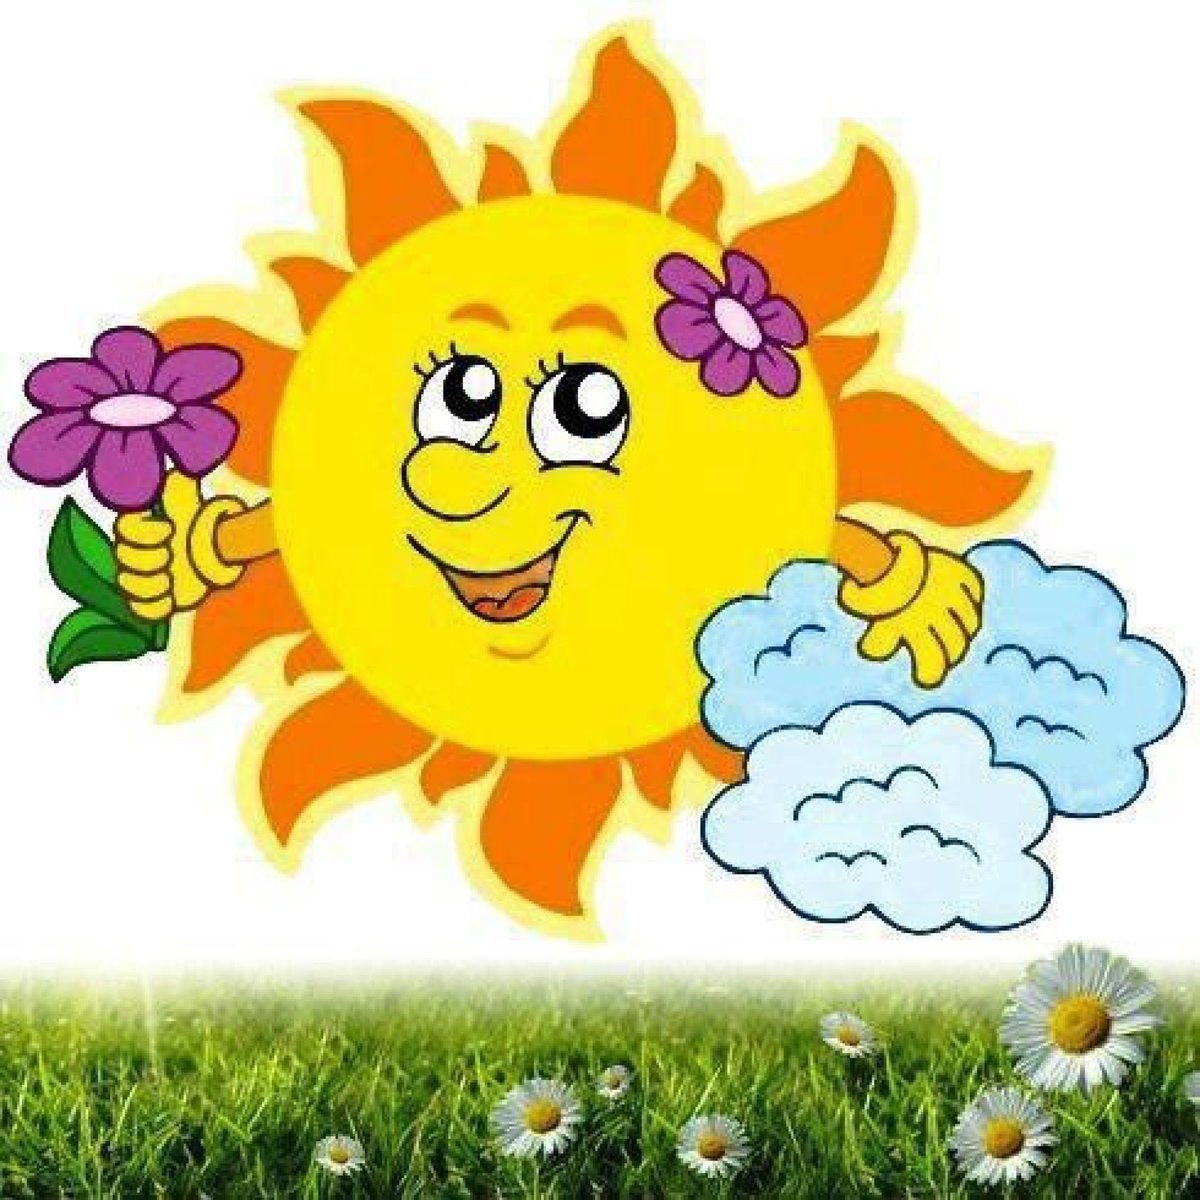 В душе тепло и солнечно. Солнышко картинка. Солнце детские картинки. Красивое солнышко. Солнышко рисунок для детей.